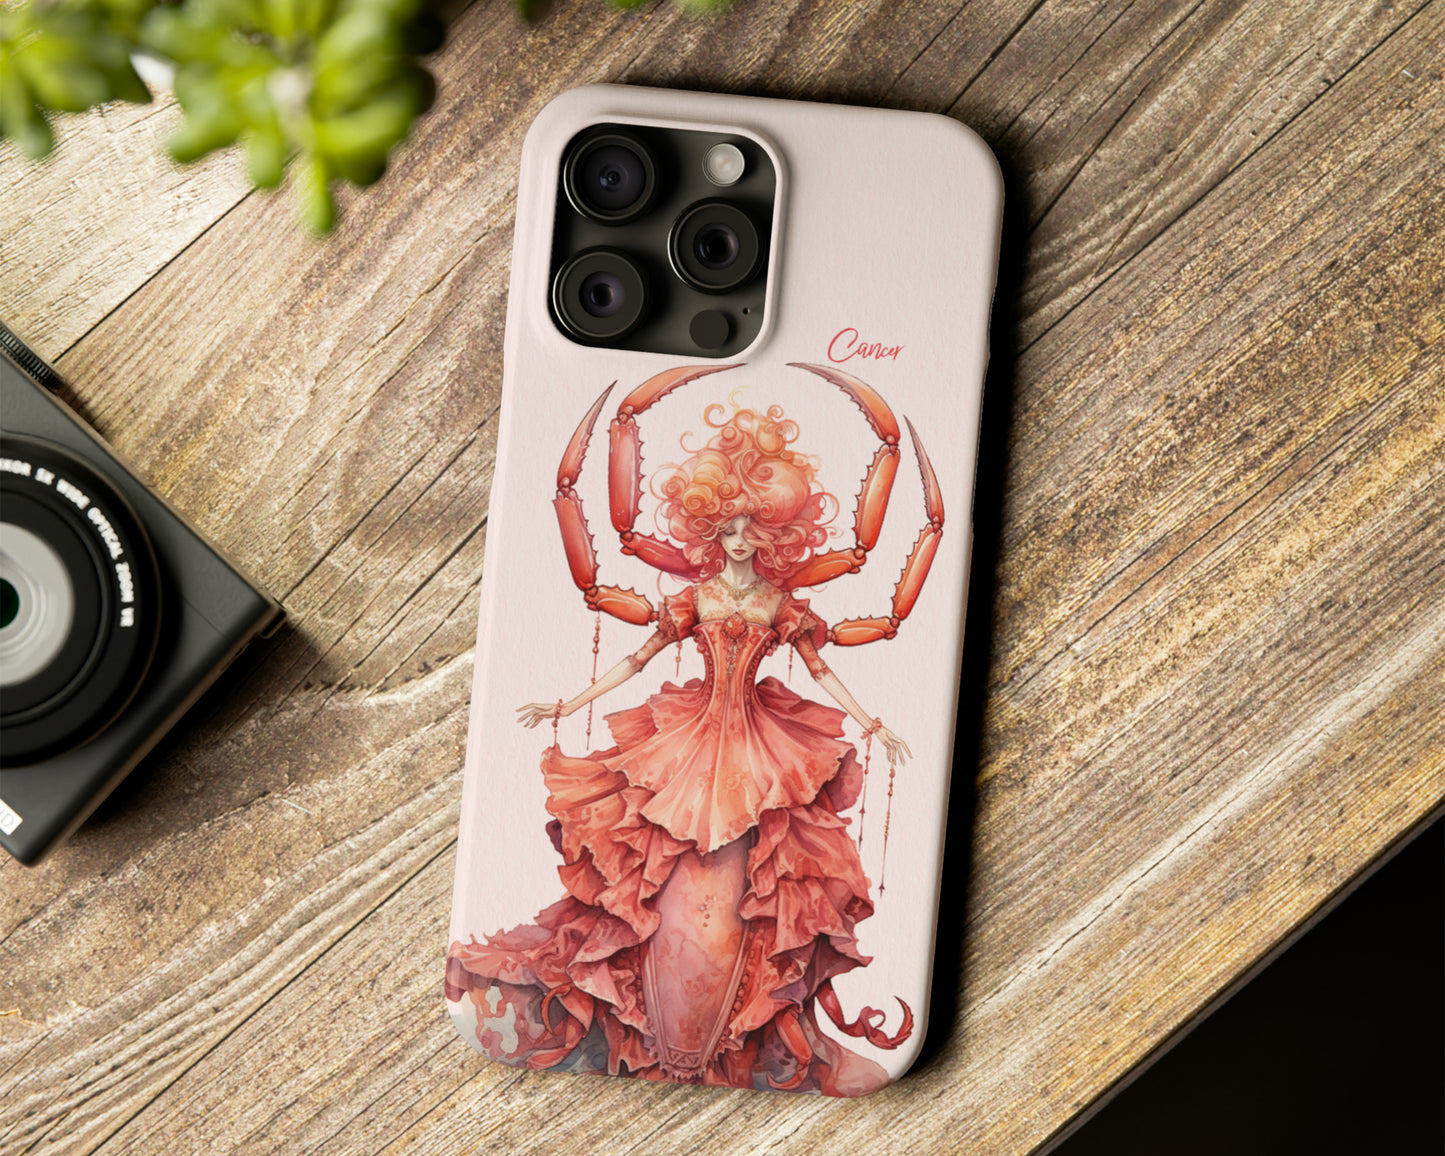 Cancer Zodiac sign watercolor Goddess iPhone case